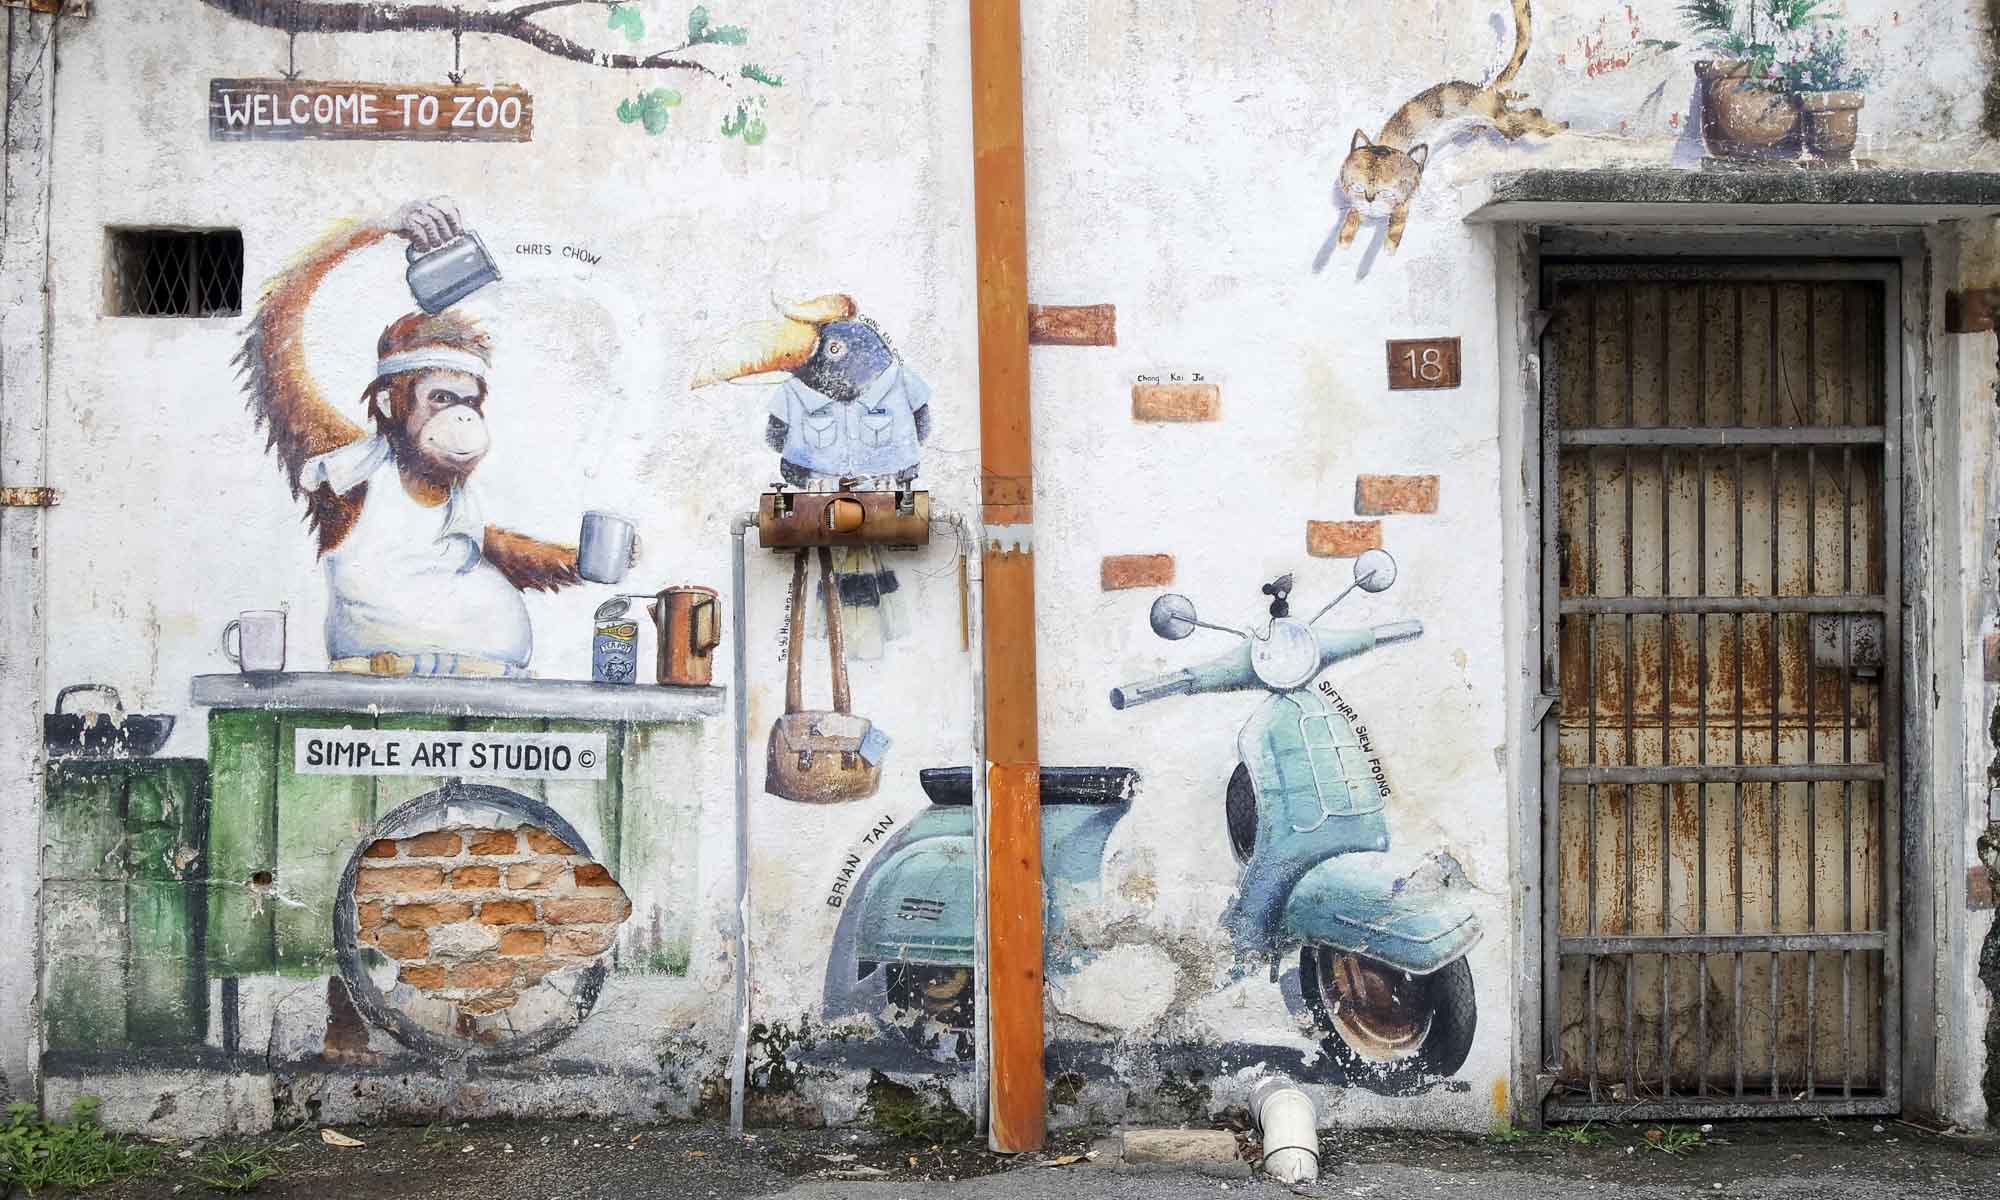 Street art Ipoh: Welcome to Zoo